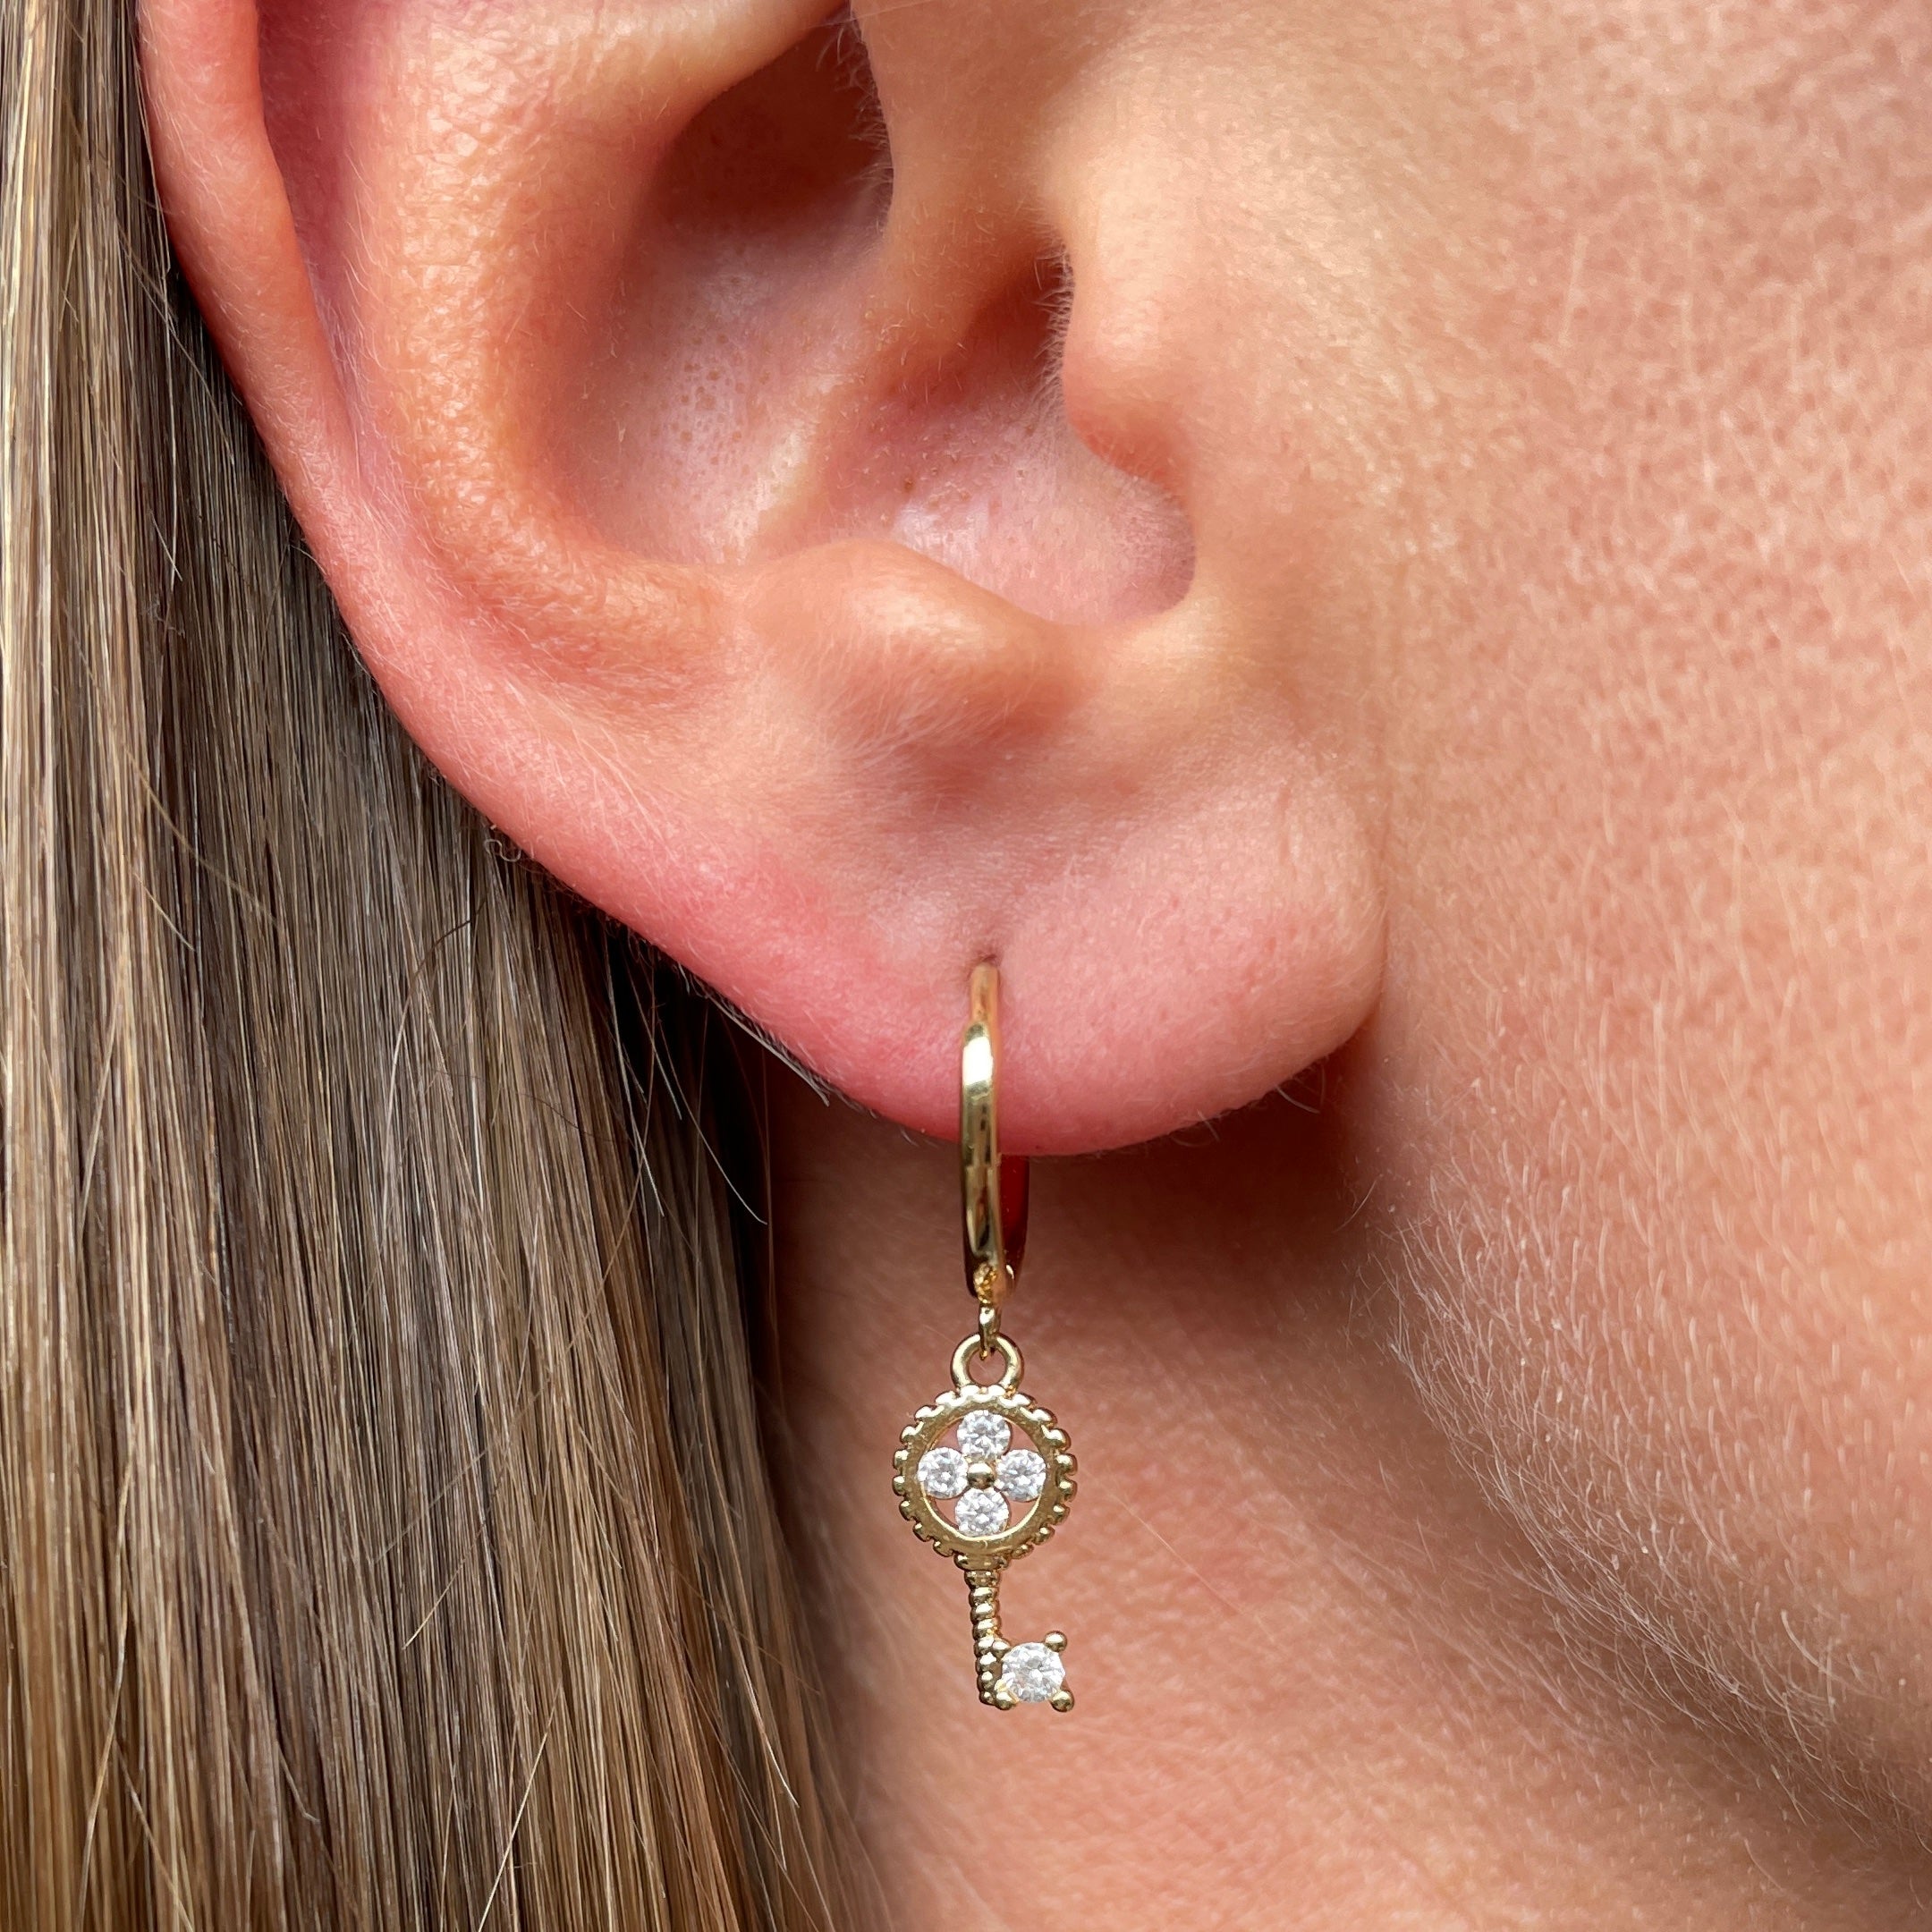 Gold-plated “Keys” earrings